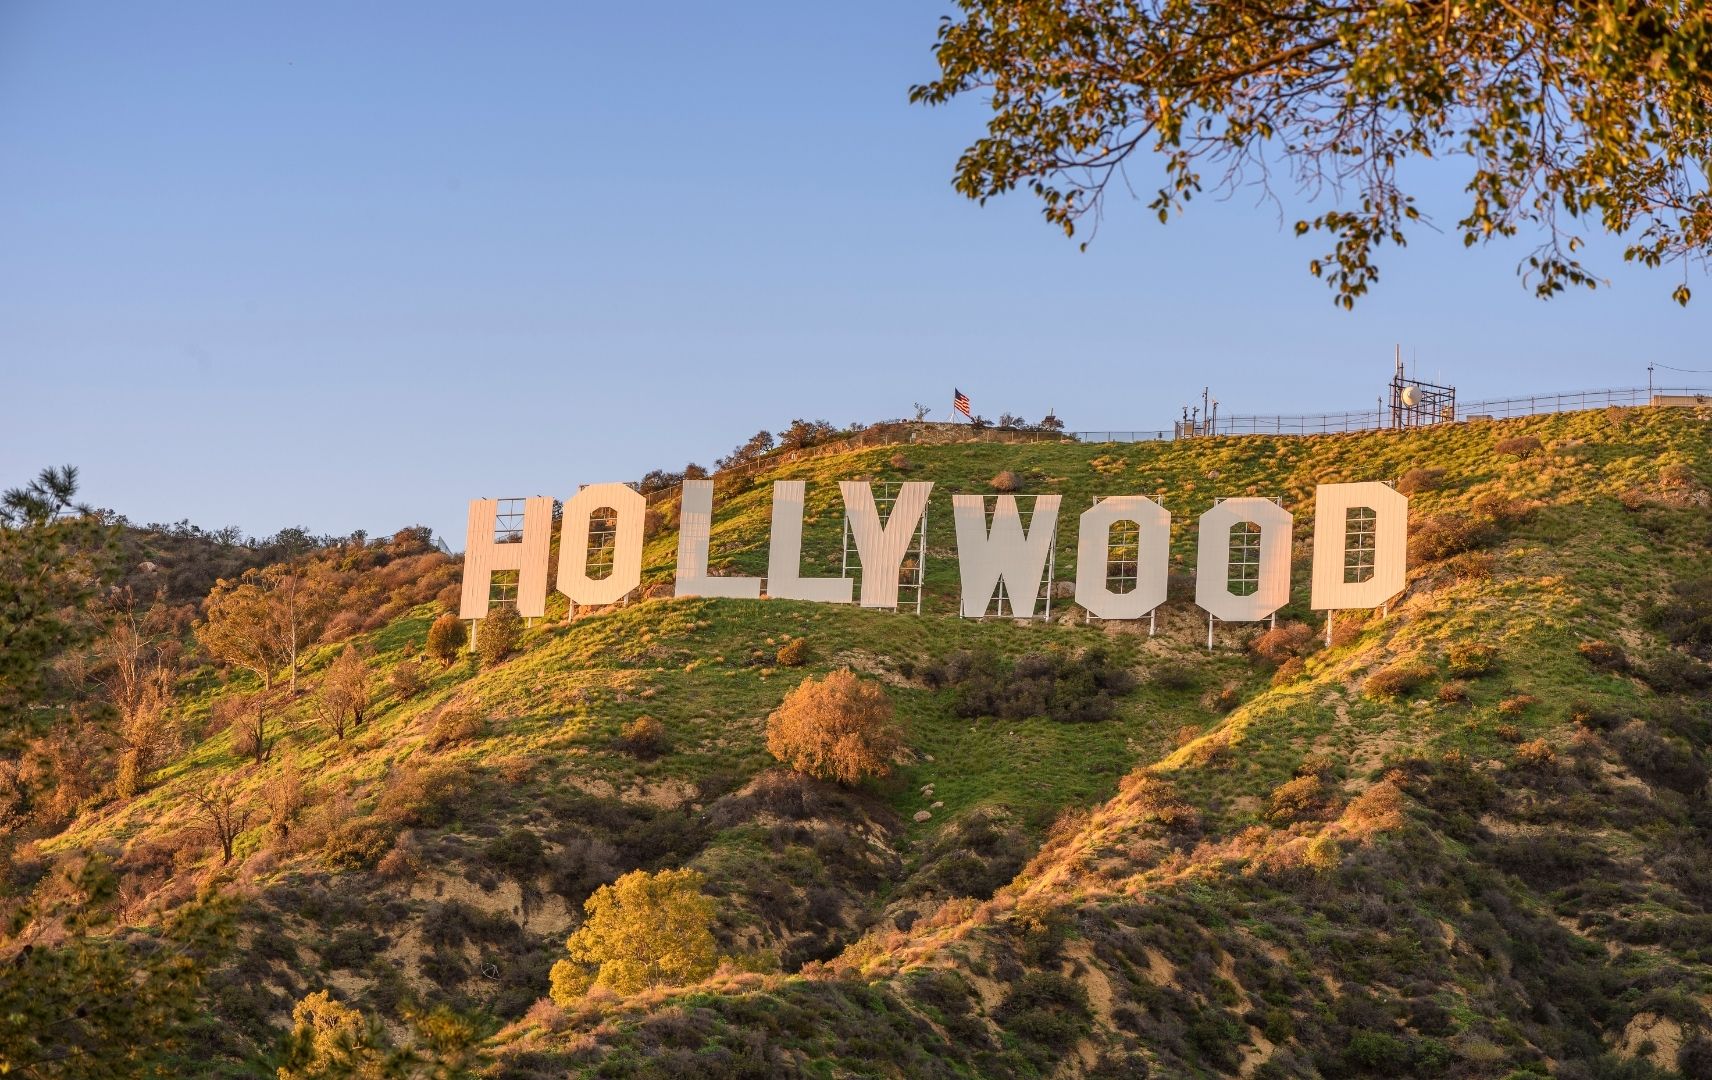 USA - Los Angeles Hollywood Sign